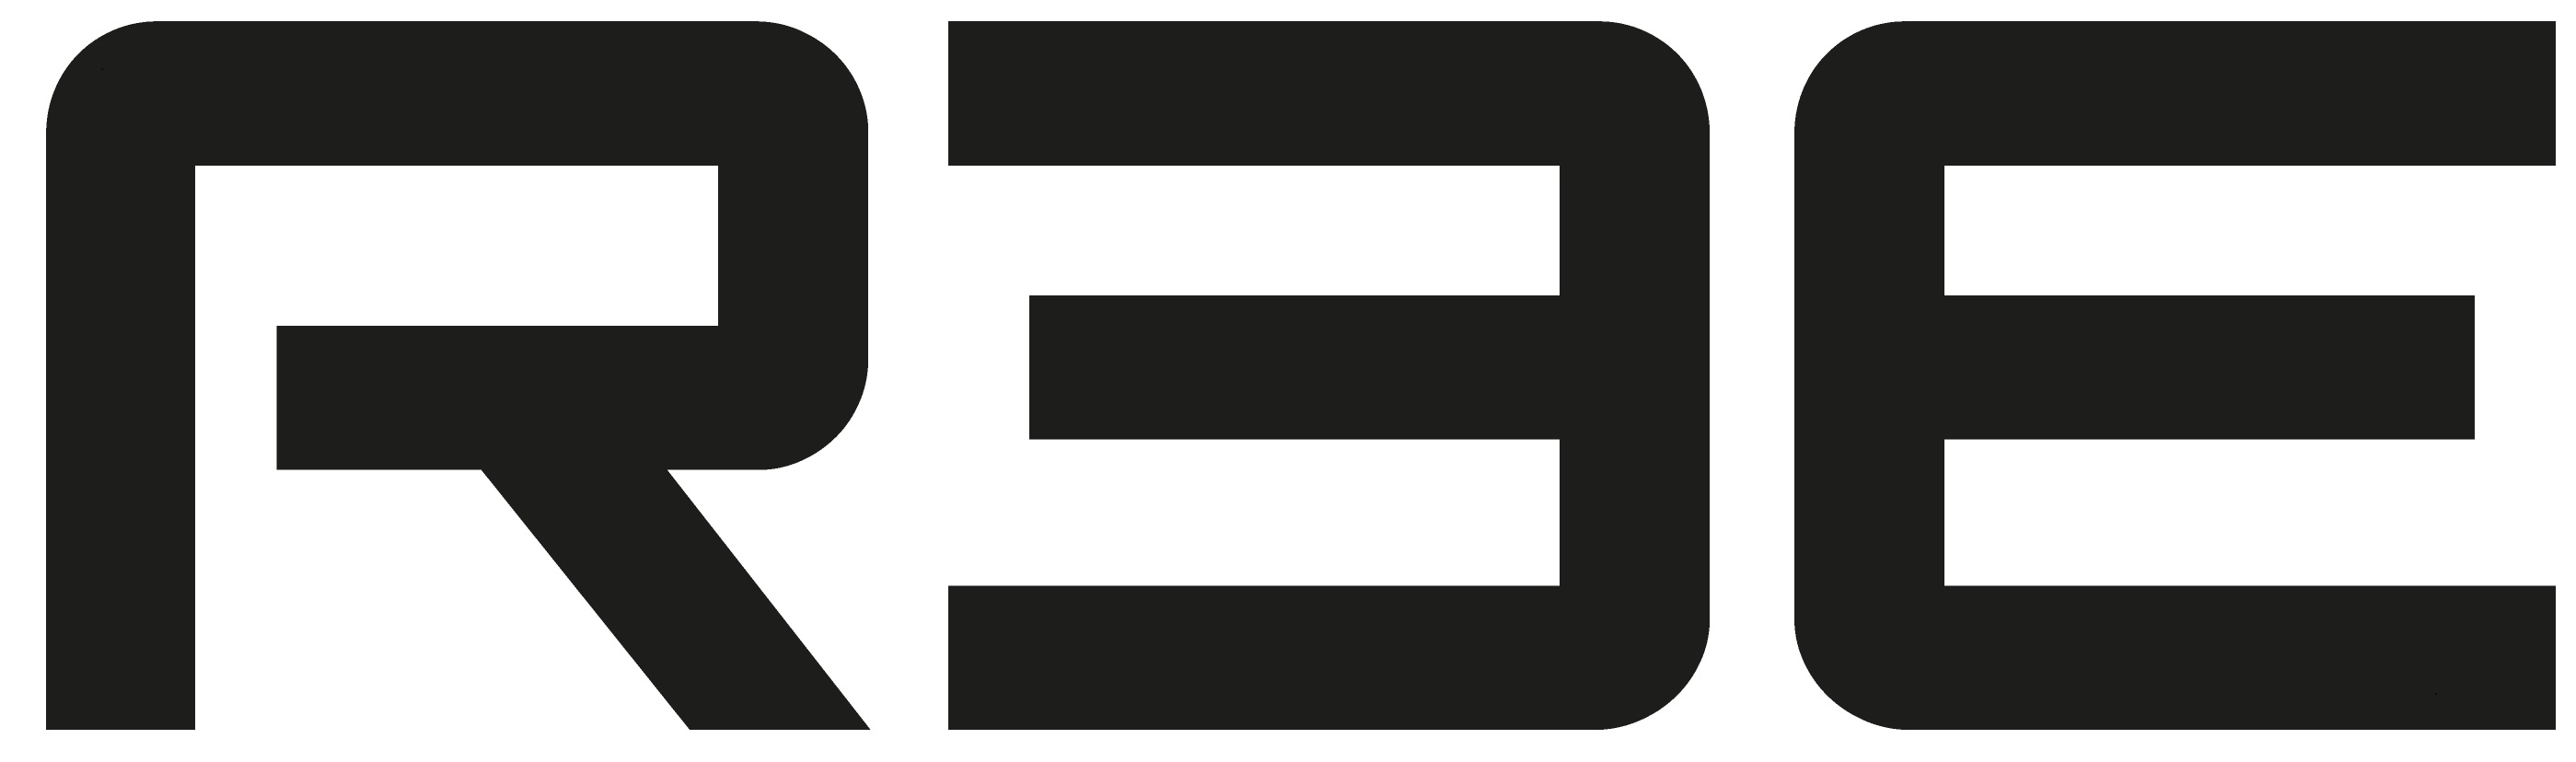 REE-Black-Transparent-Logo (JPG).jpg